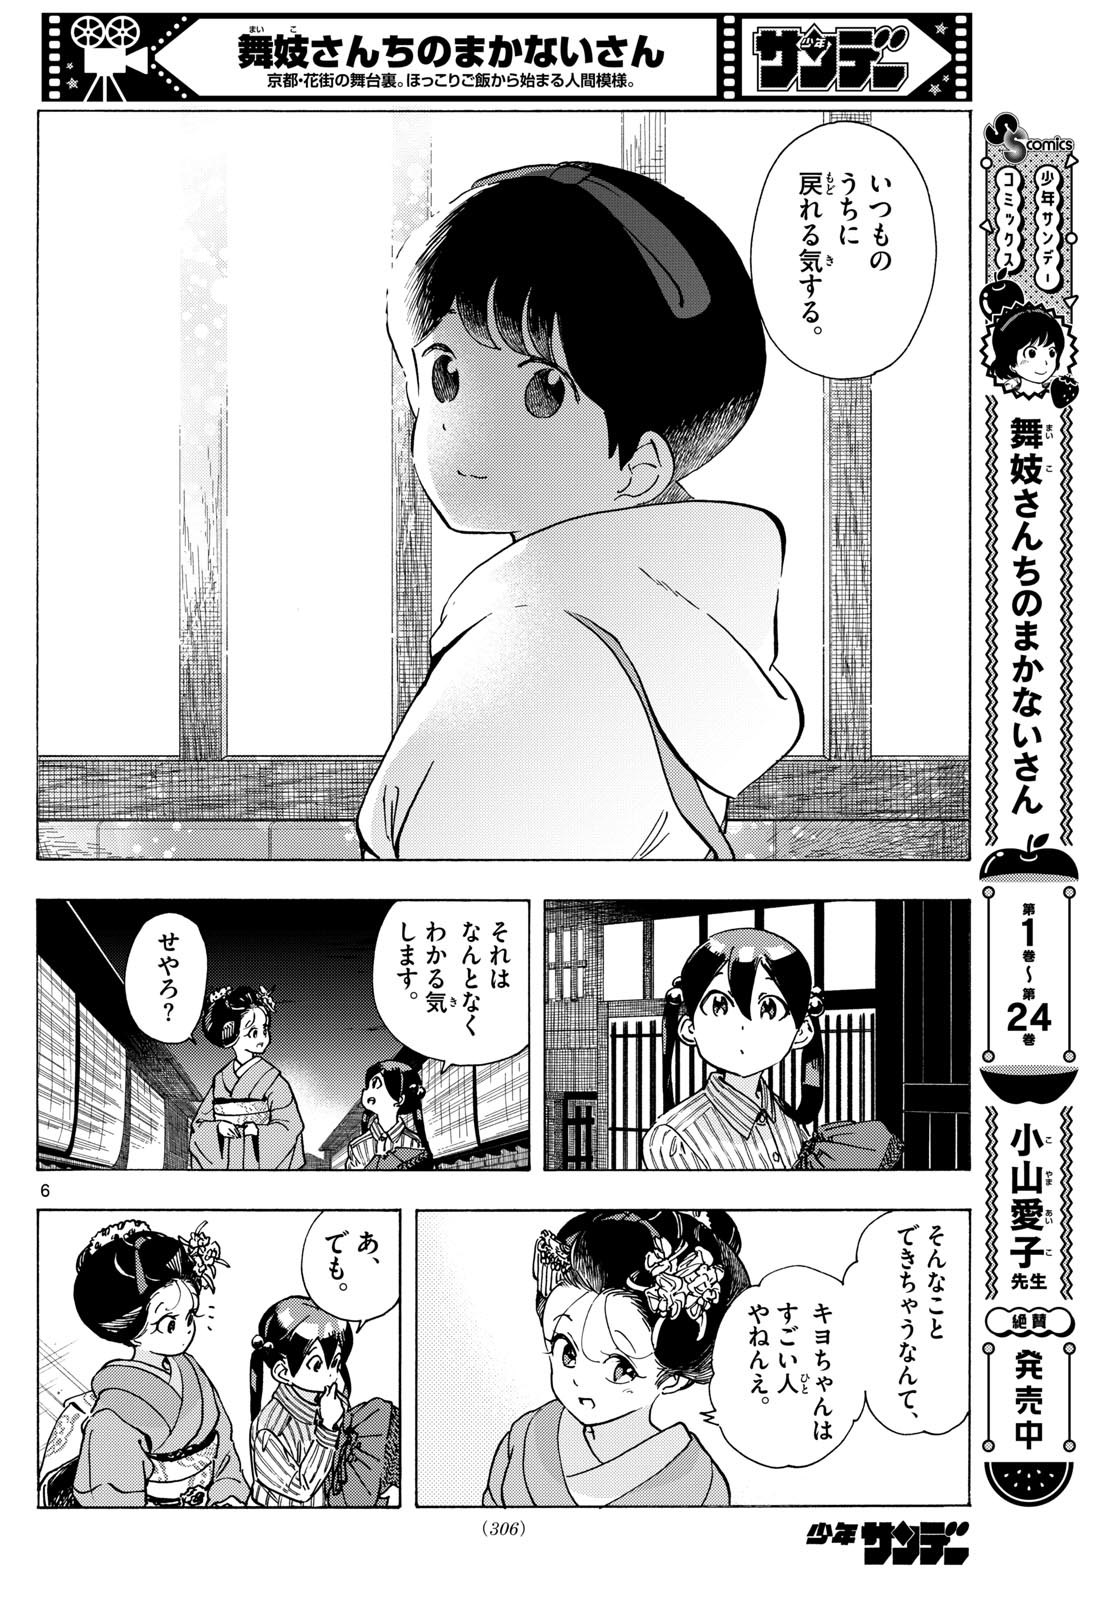 Maiko-san Chi no Makanai-san - Chapter 290 - Page 6